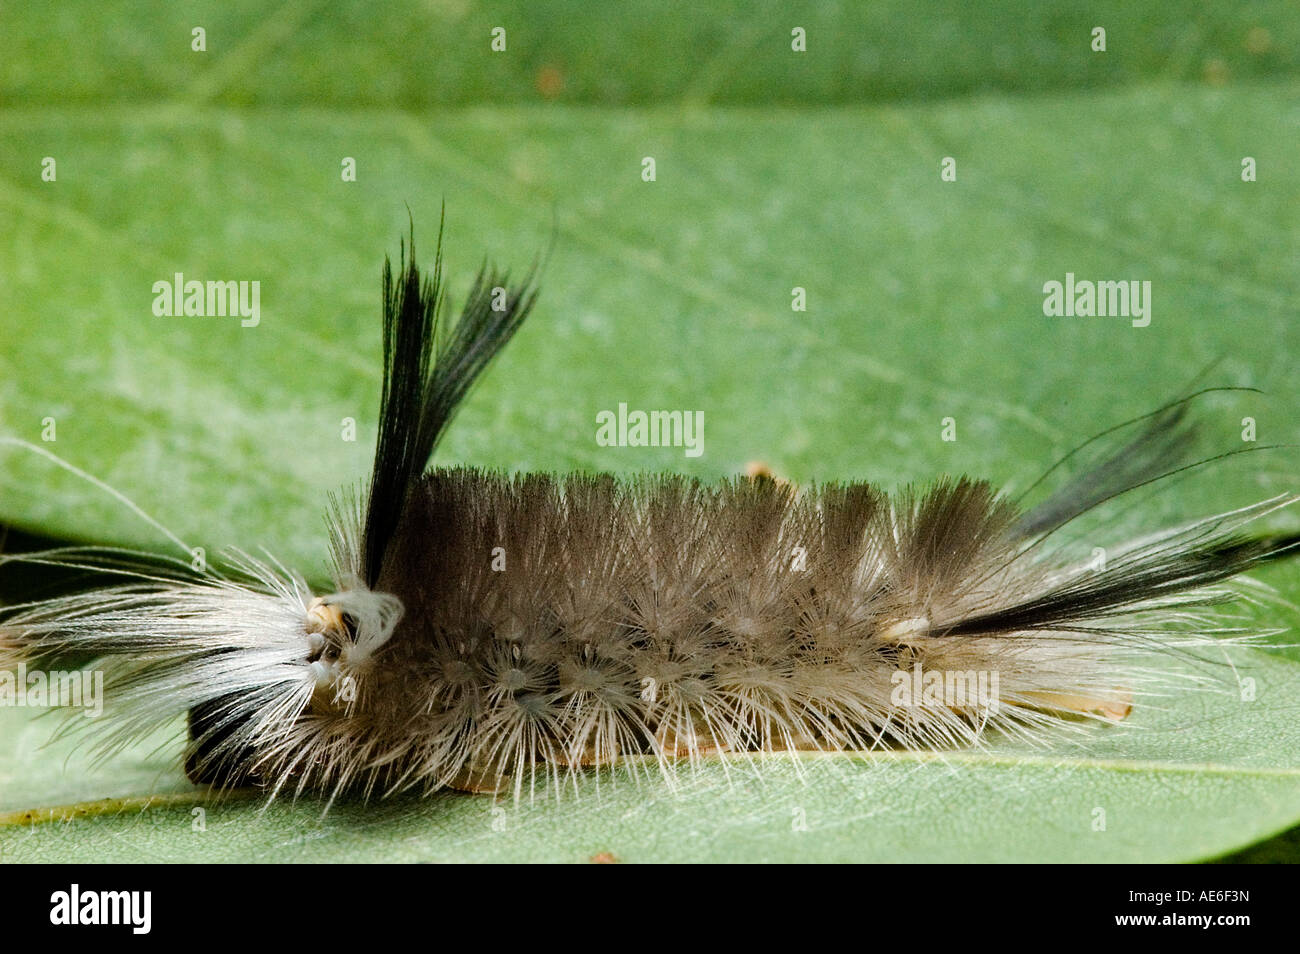 Furry caterpillar on a leaf Stock Photo